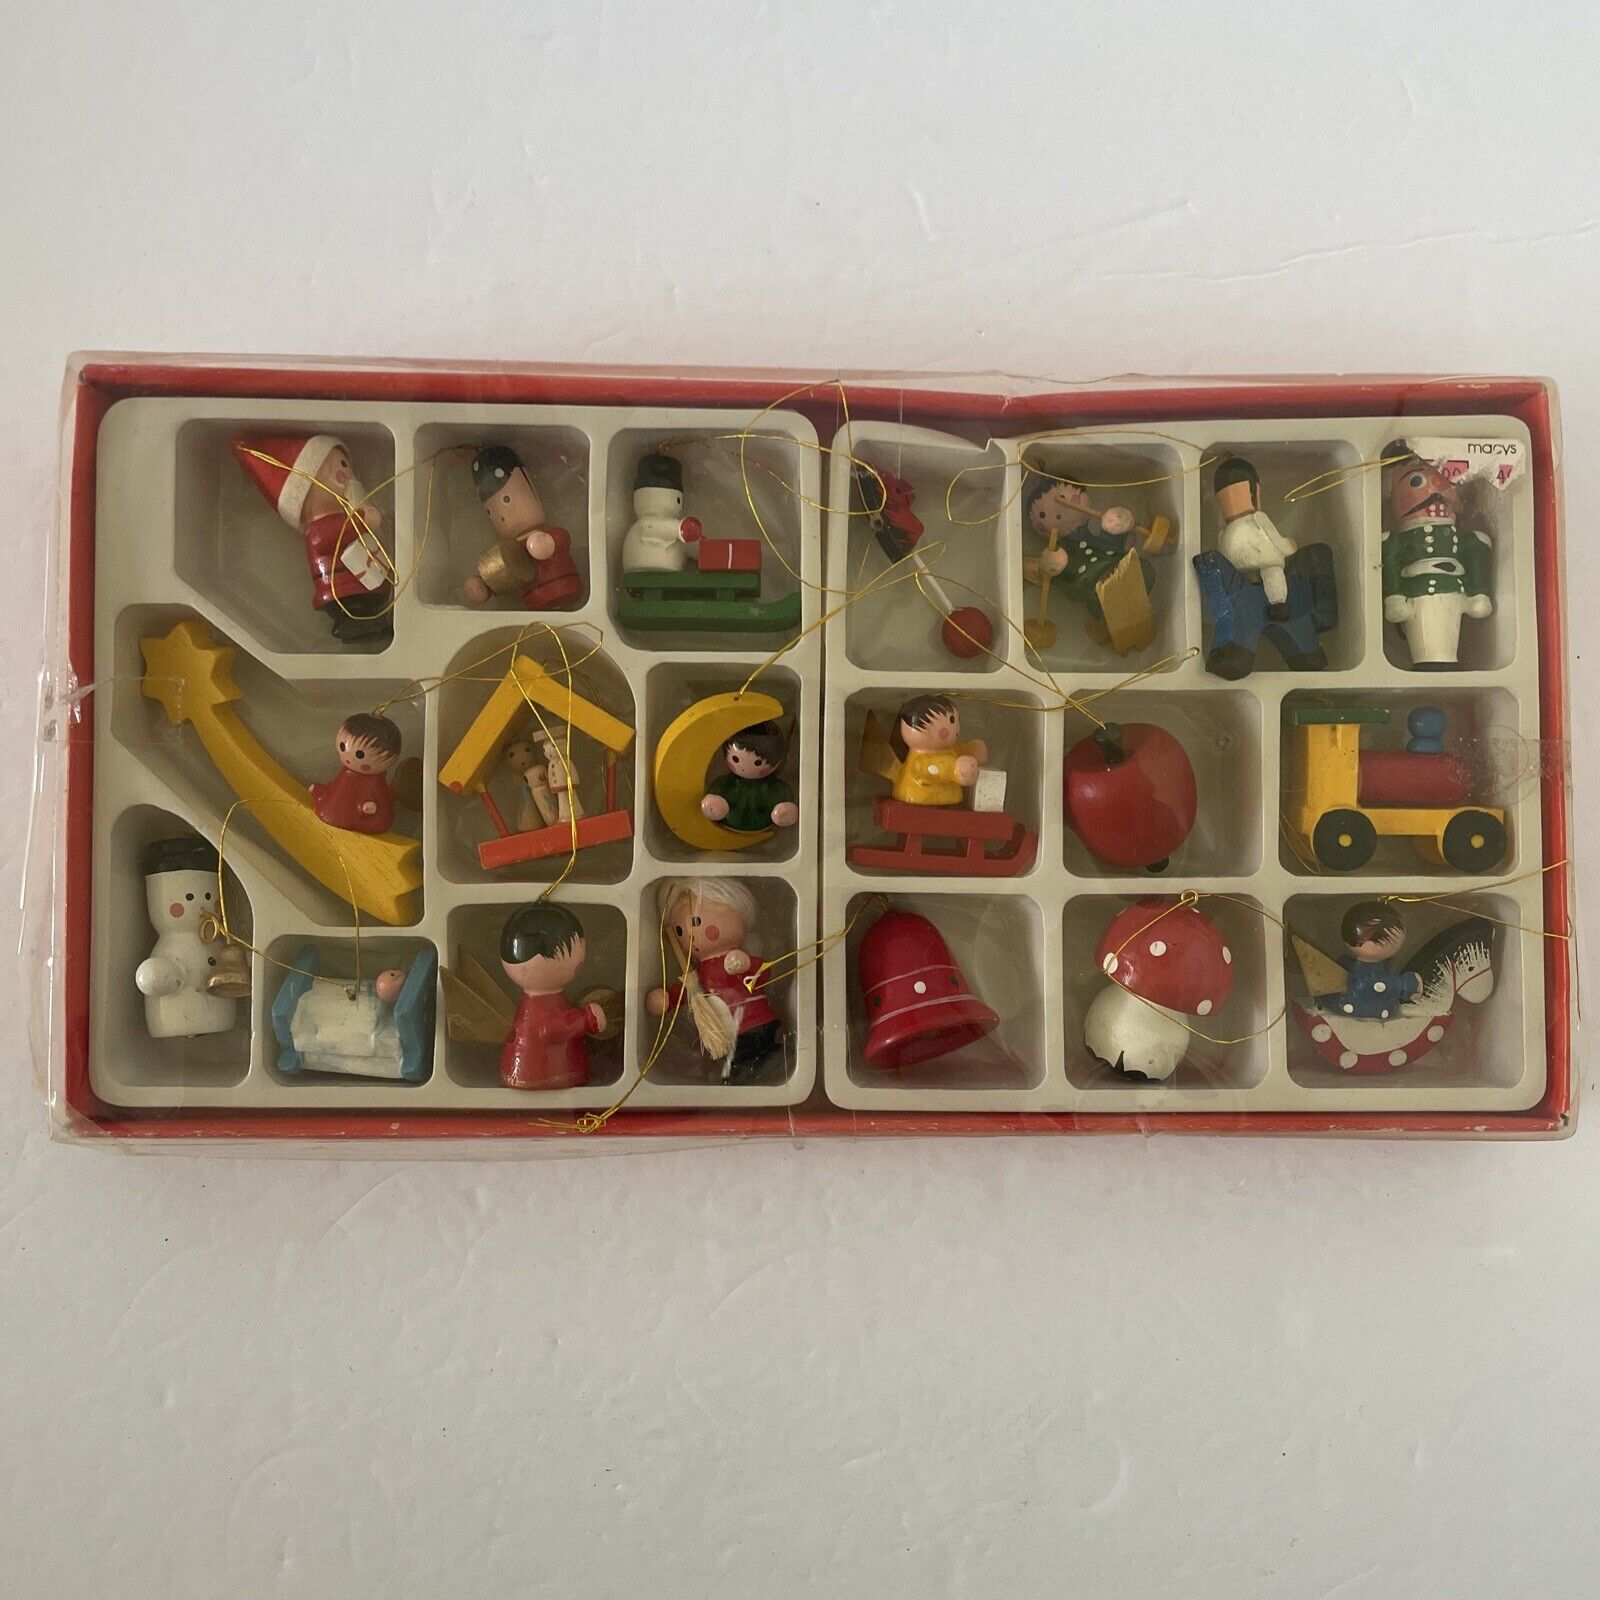 Vintage Christmas Wooden Ornaments Box of 20 Mushroom, Shooting Star, Moon, Etc.